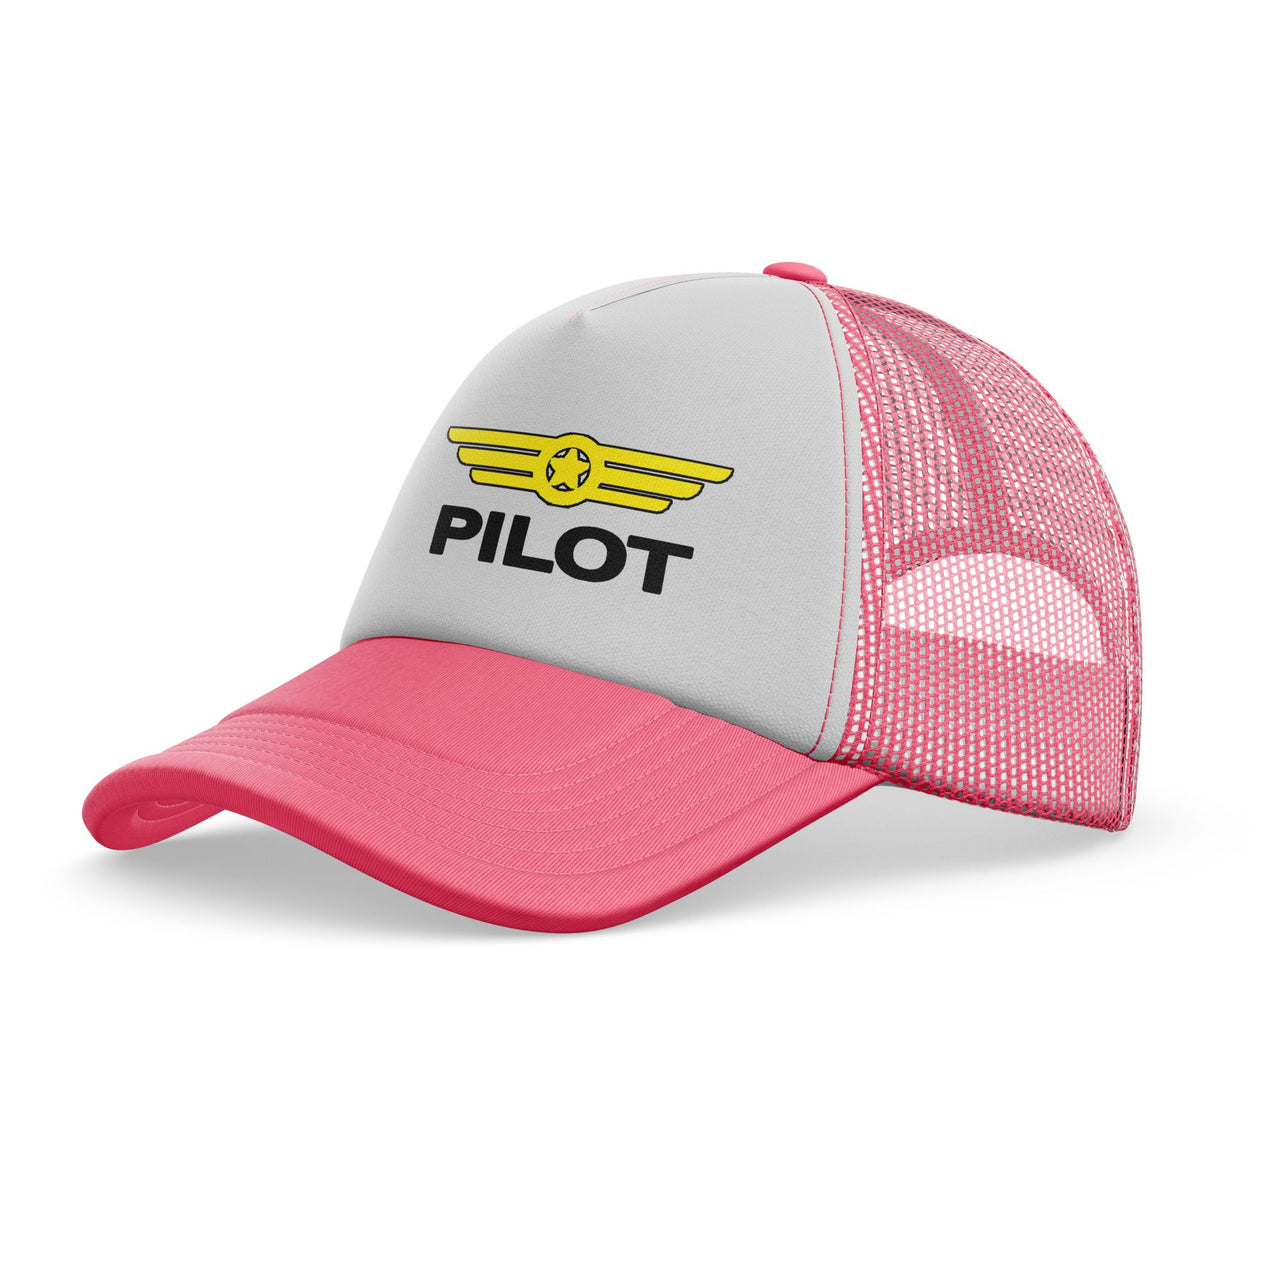 Pilot & Badge Designed Trucker Caps & Hats